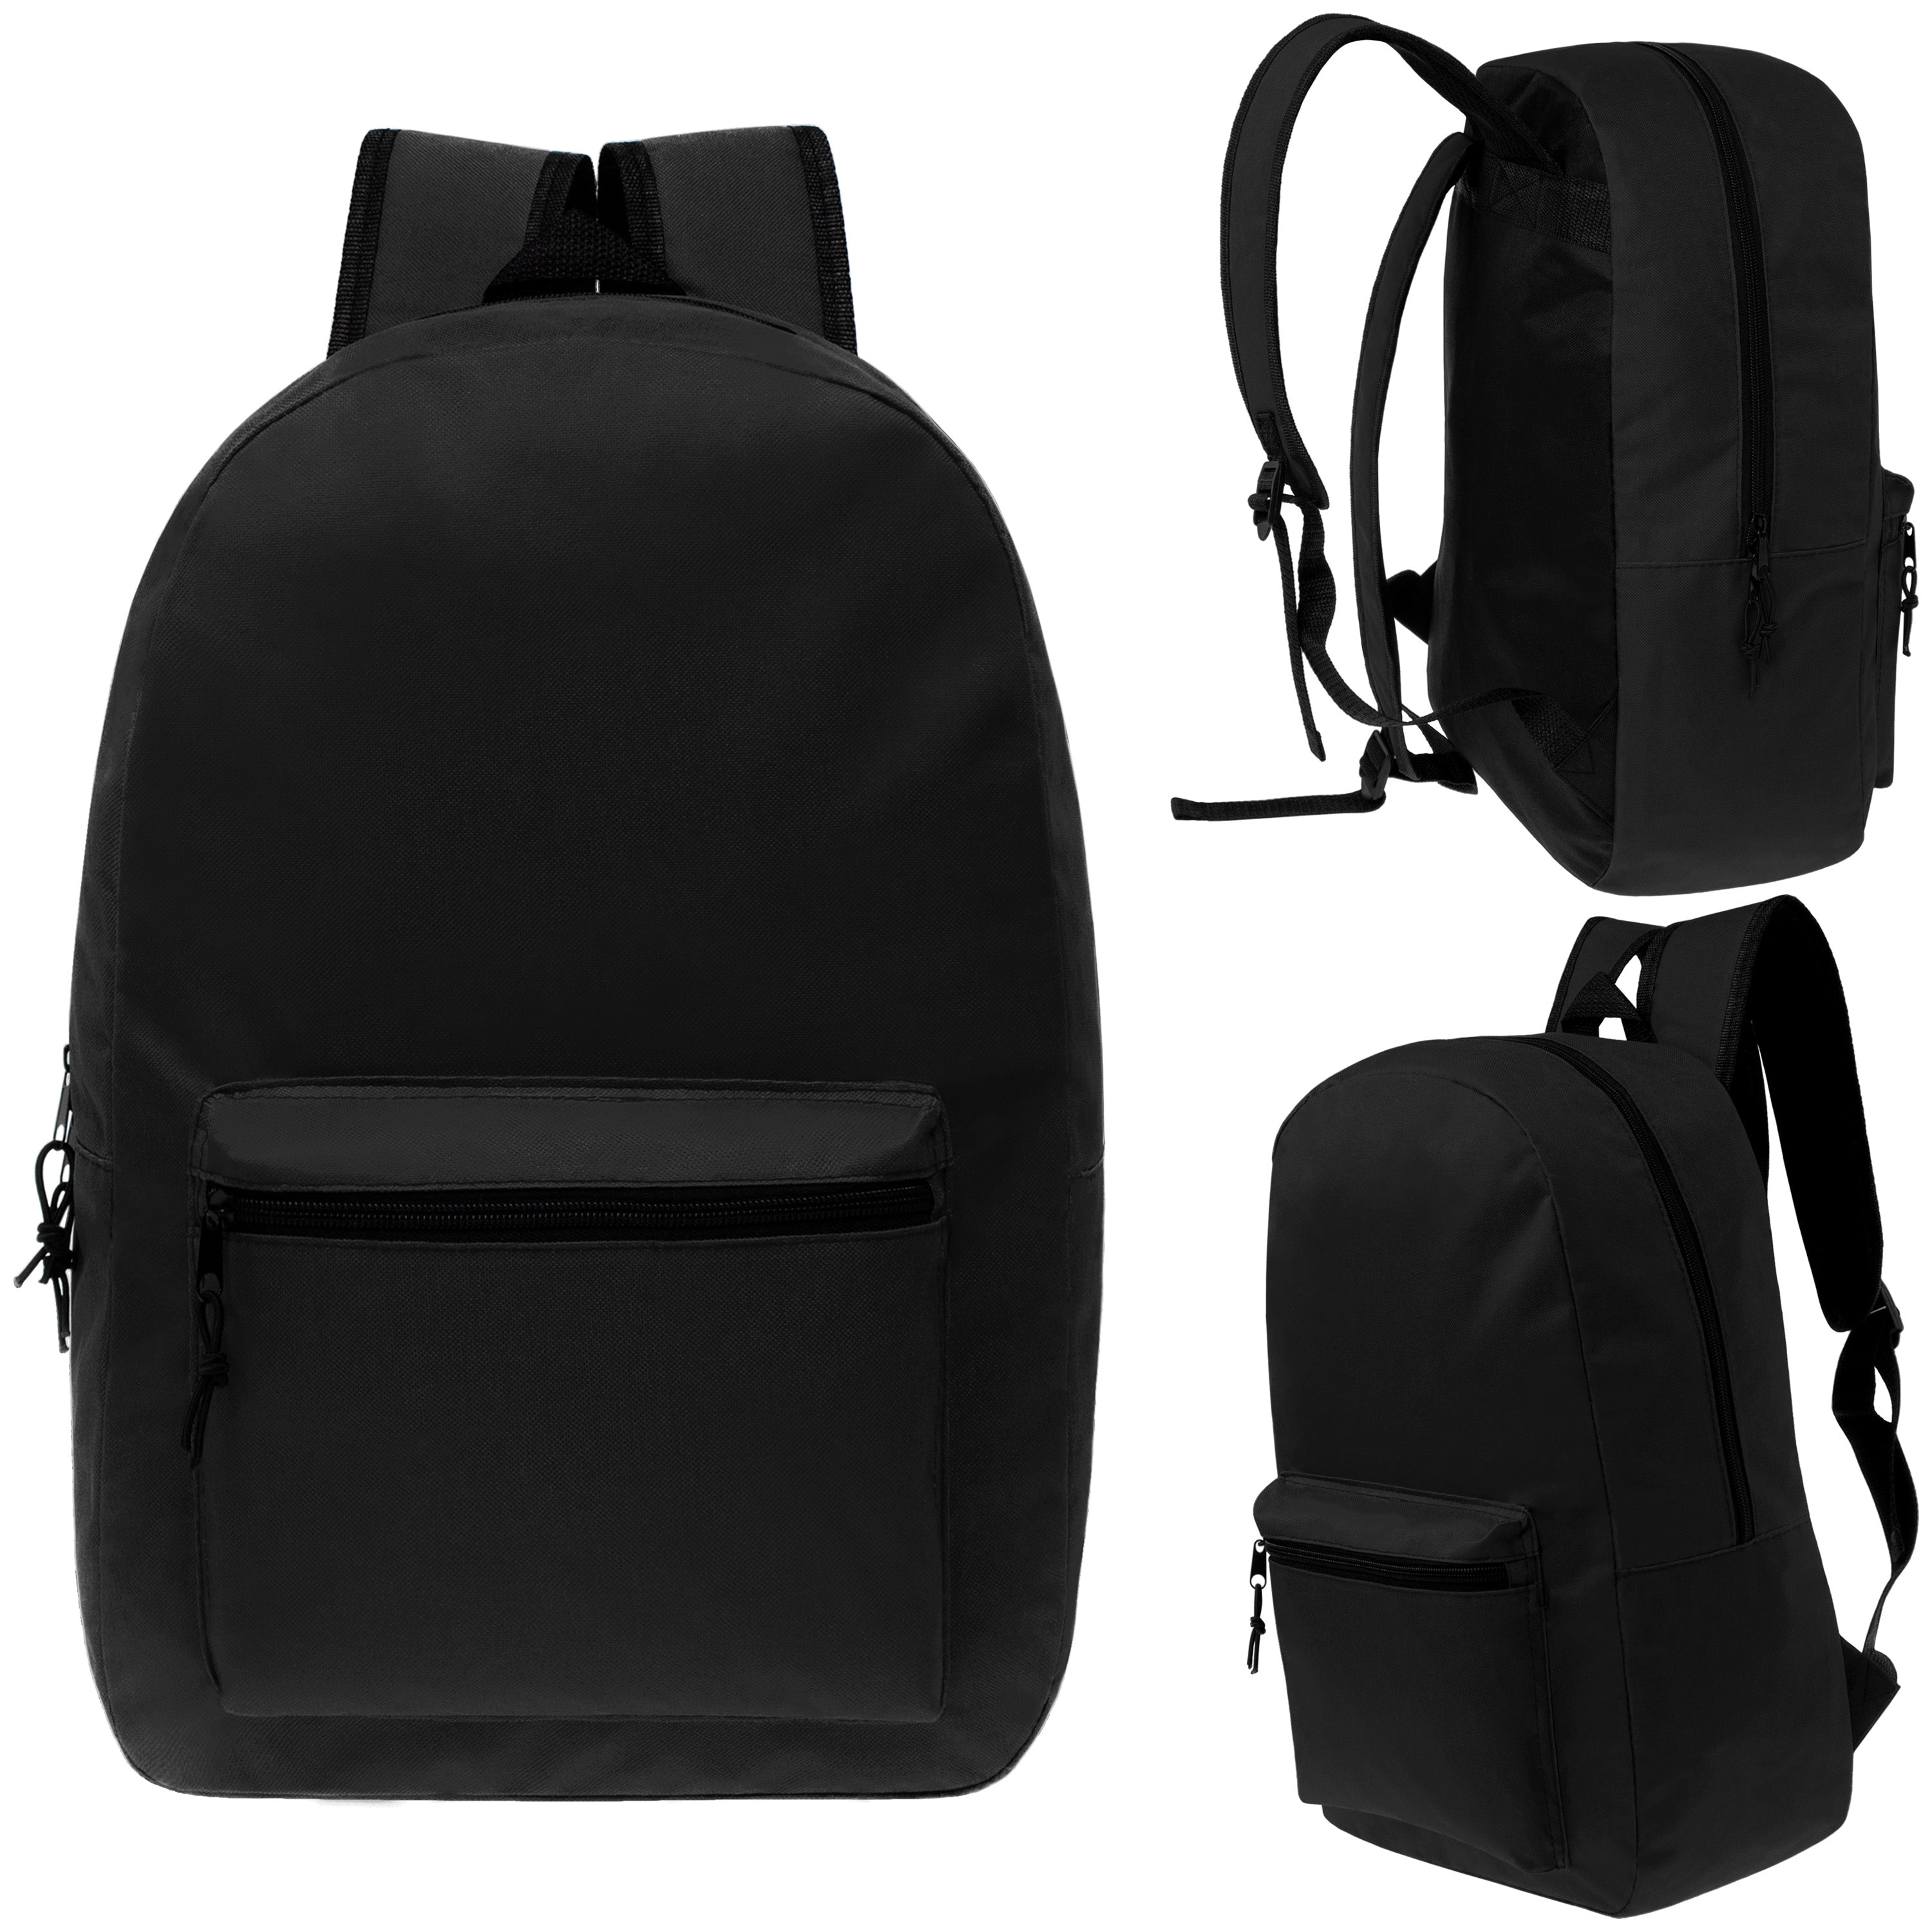 19 inch black wholesale backpack in bulk